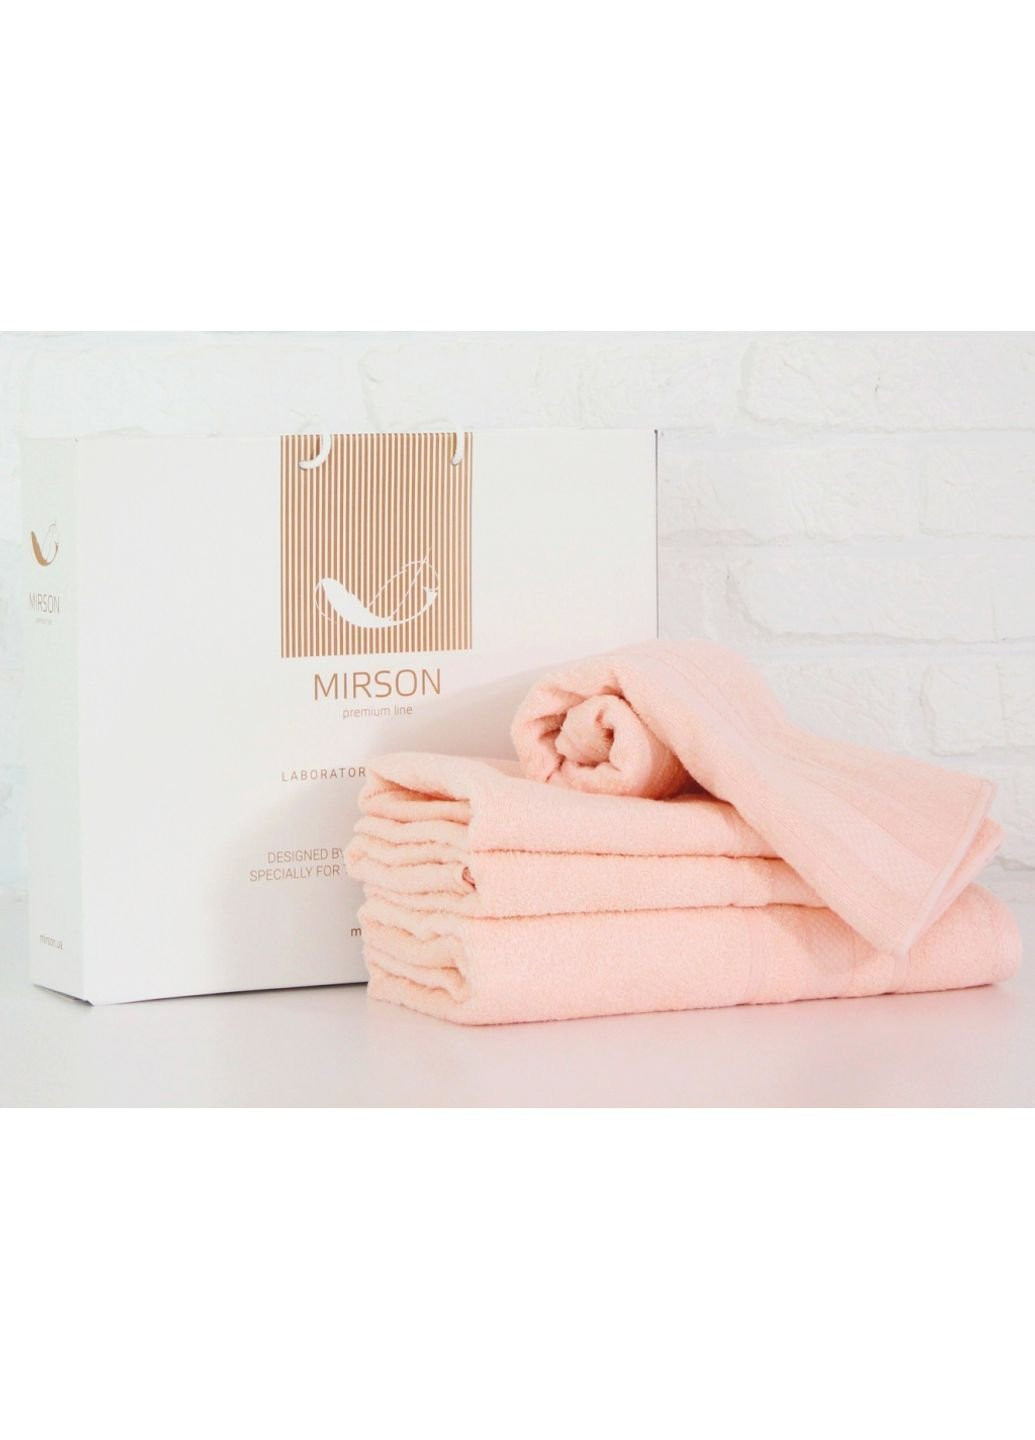 No Brand полотенце mirson набор банных №5080 elite softness peach 40х70, 50х90, 70х140 (2200003975727) персиковый производство - Украина